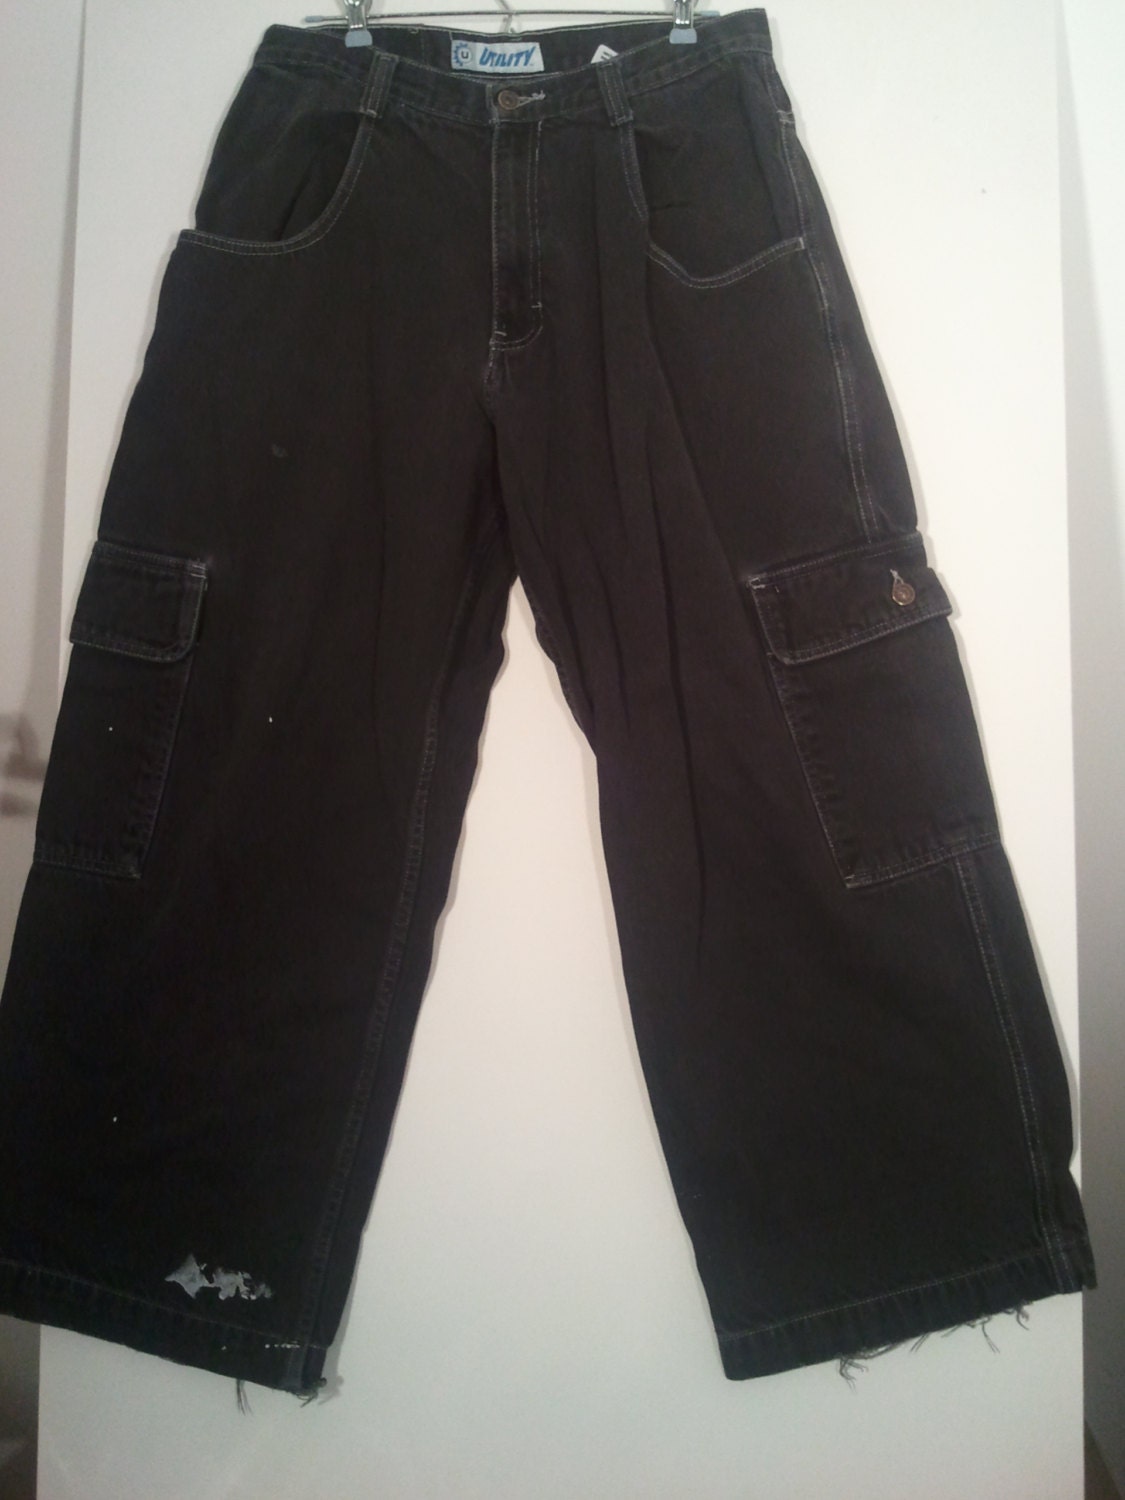 Utility raver jeans 33 men 90s grunge elephant pants denim